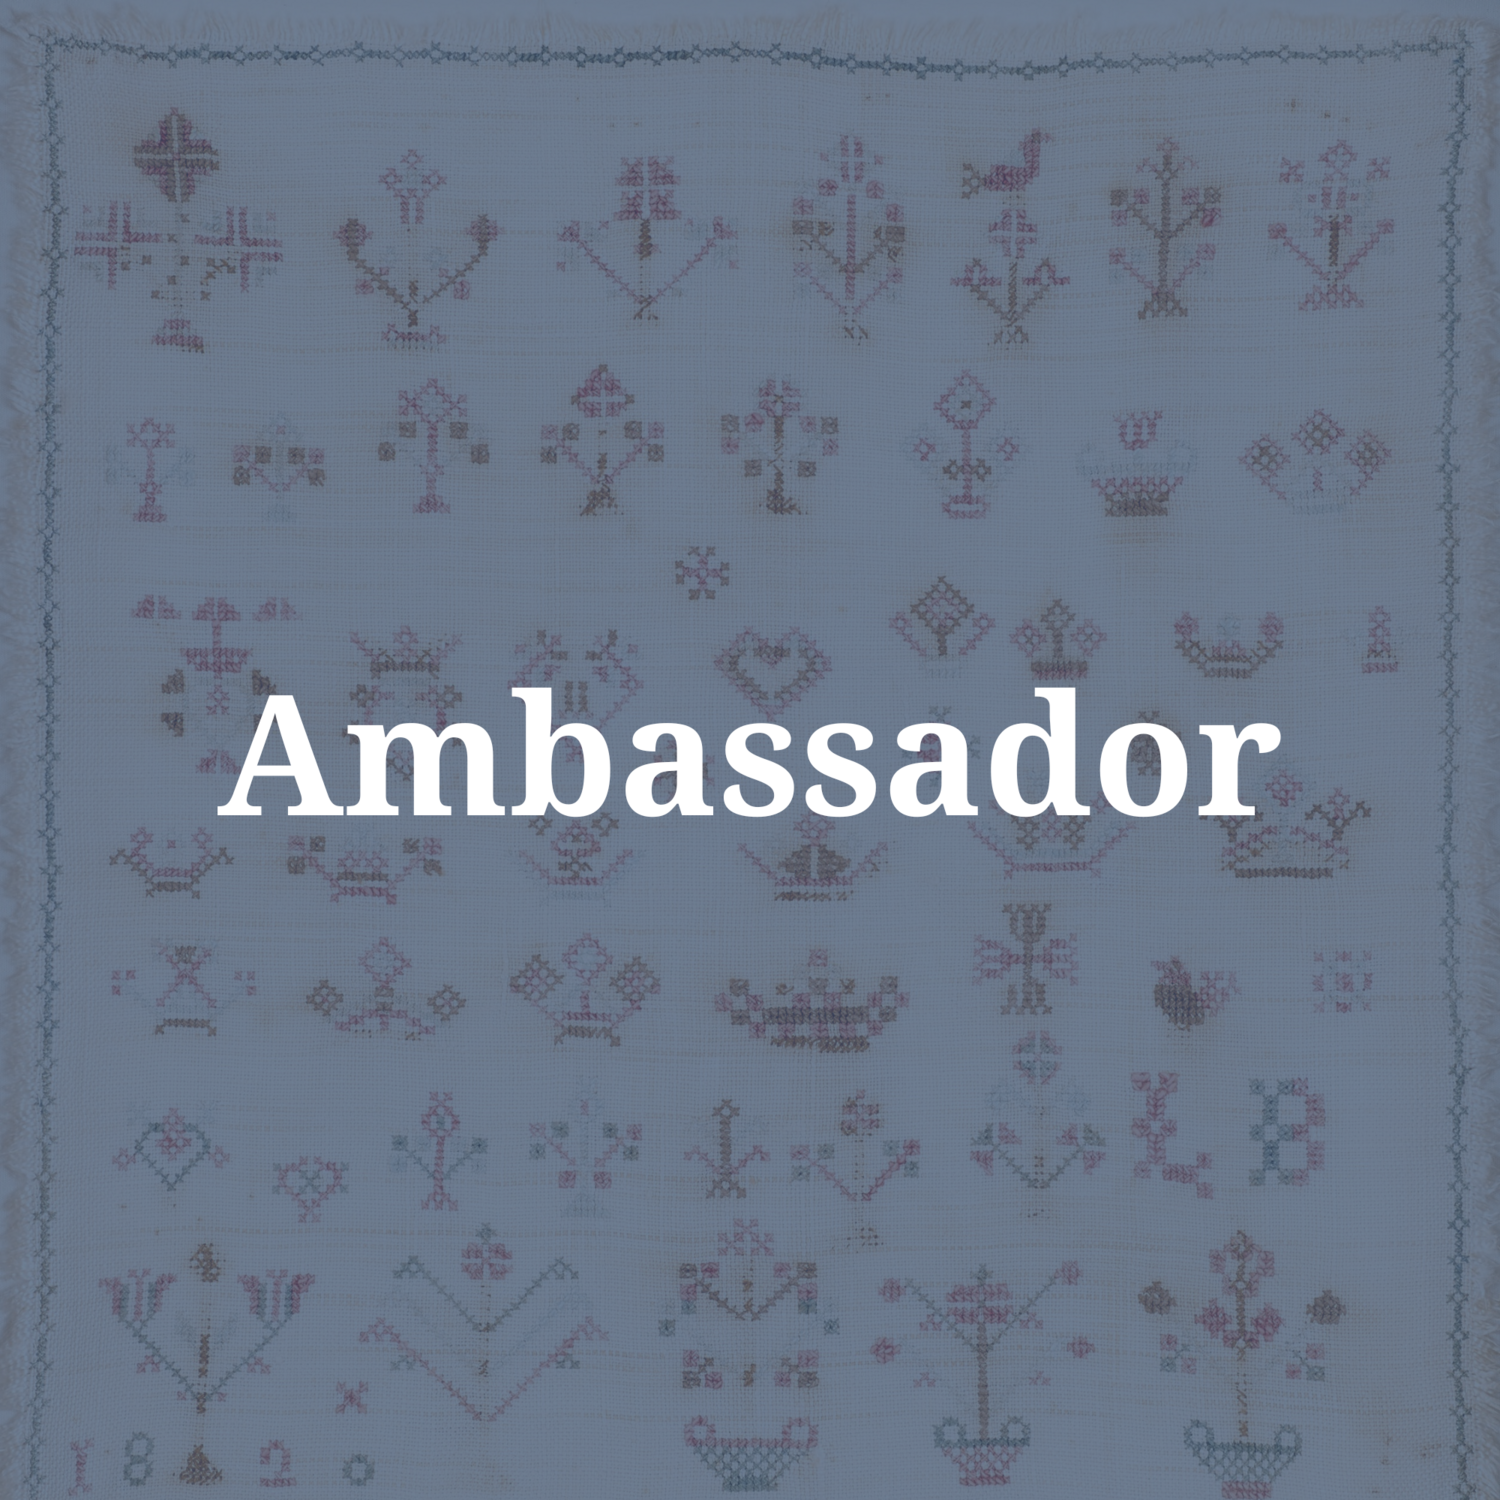 Collections Guild - Ambassador Membership